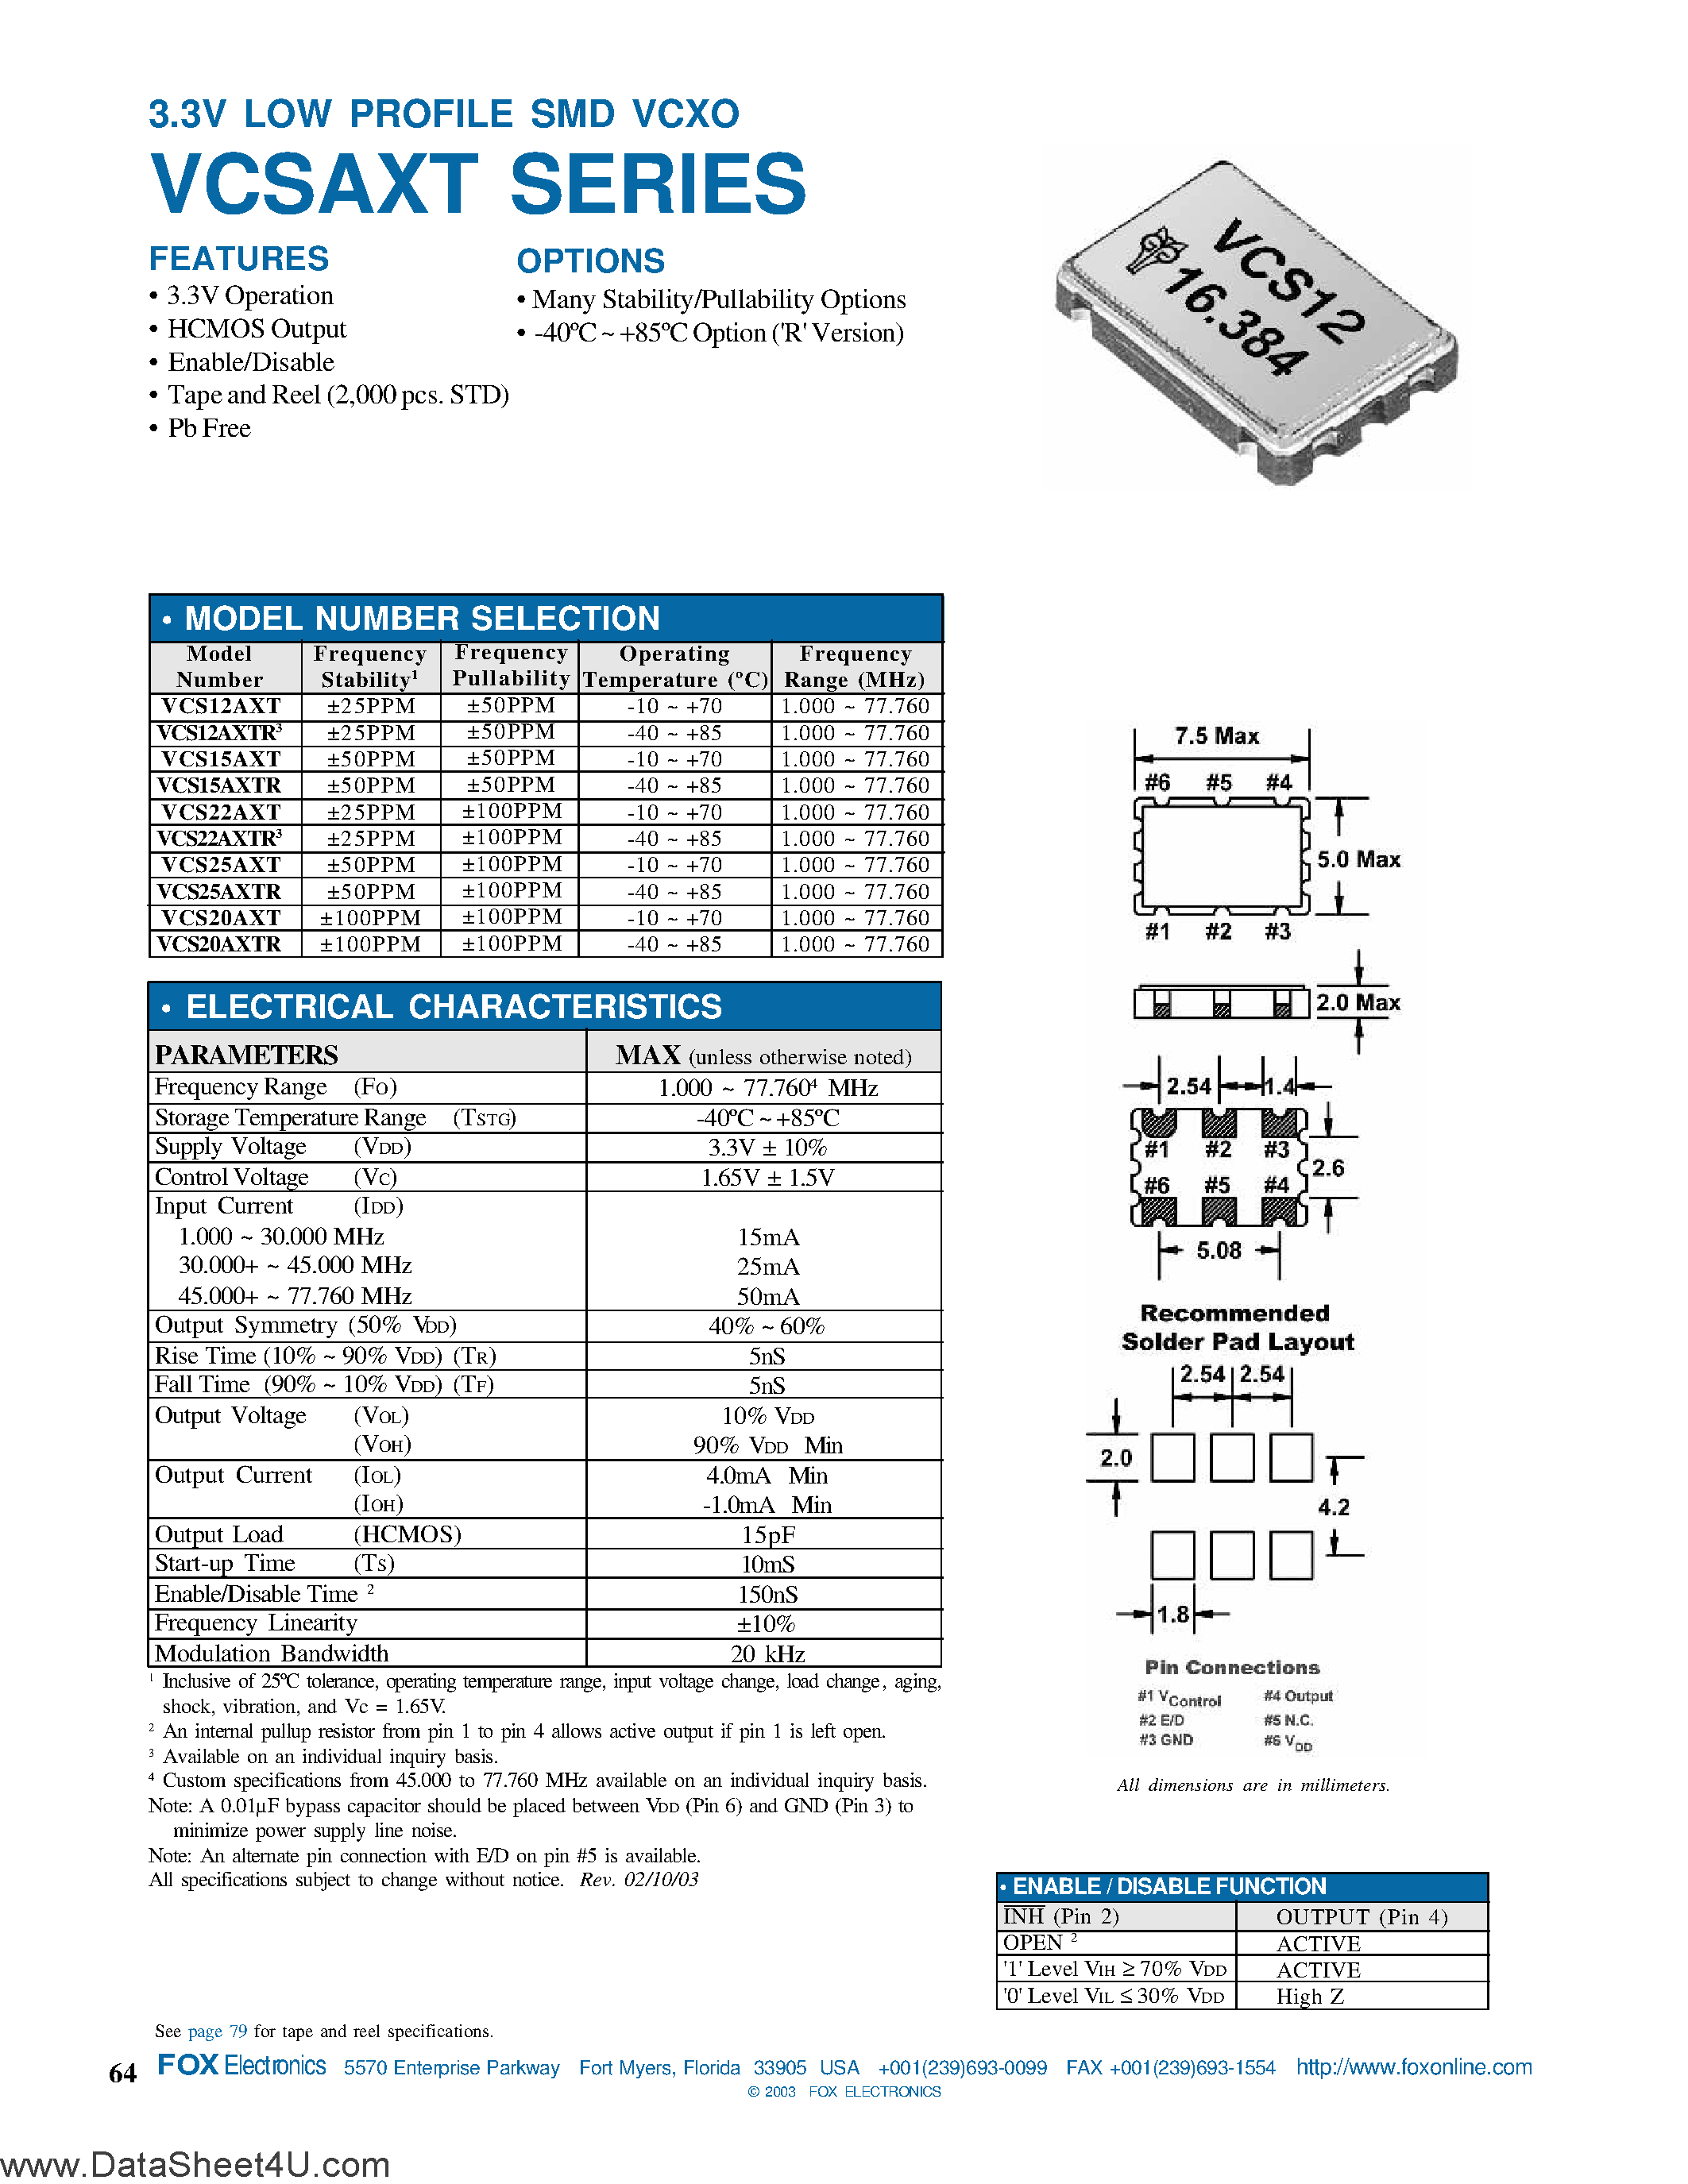 Datasheet VCS12AXT - (VCSAXT Series) 3.3V 7.5 X 5mm Hcmos Ceramic SMD page 1